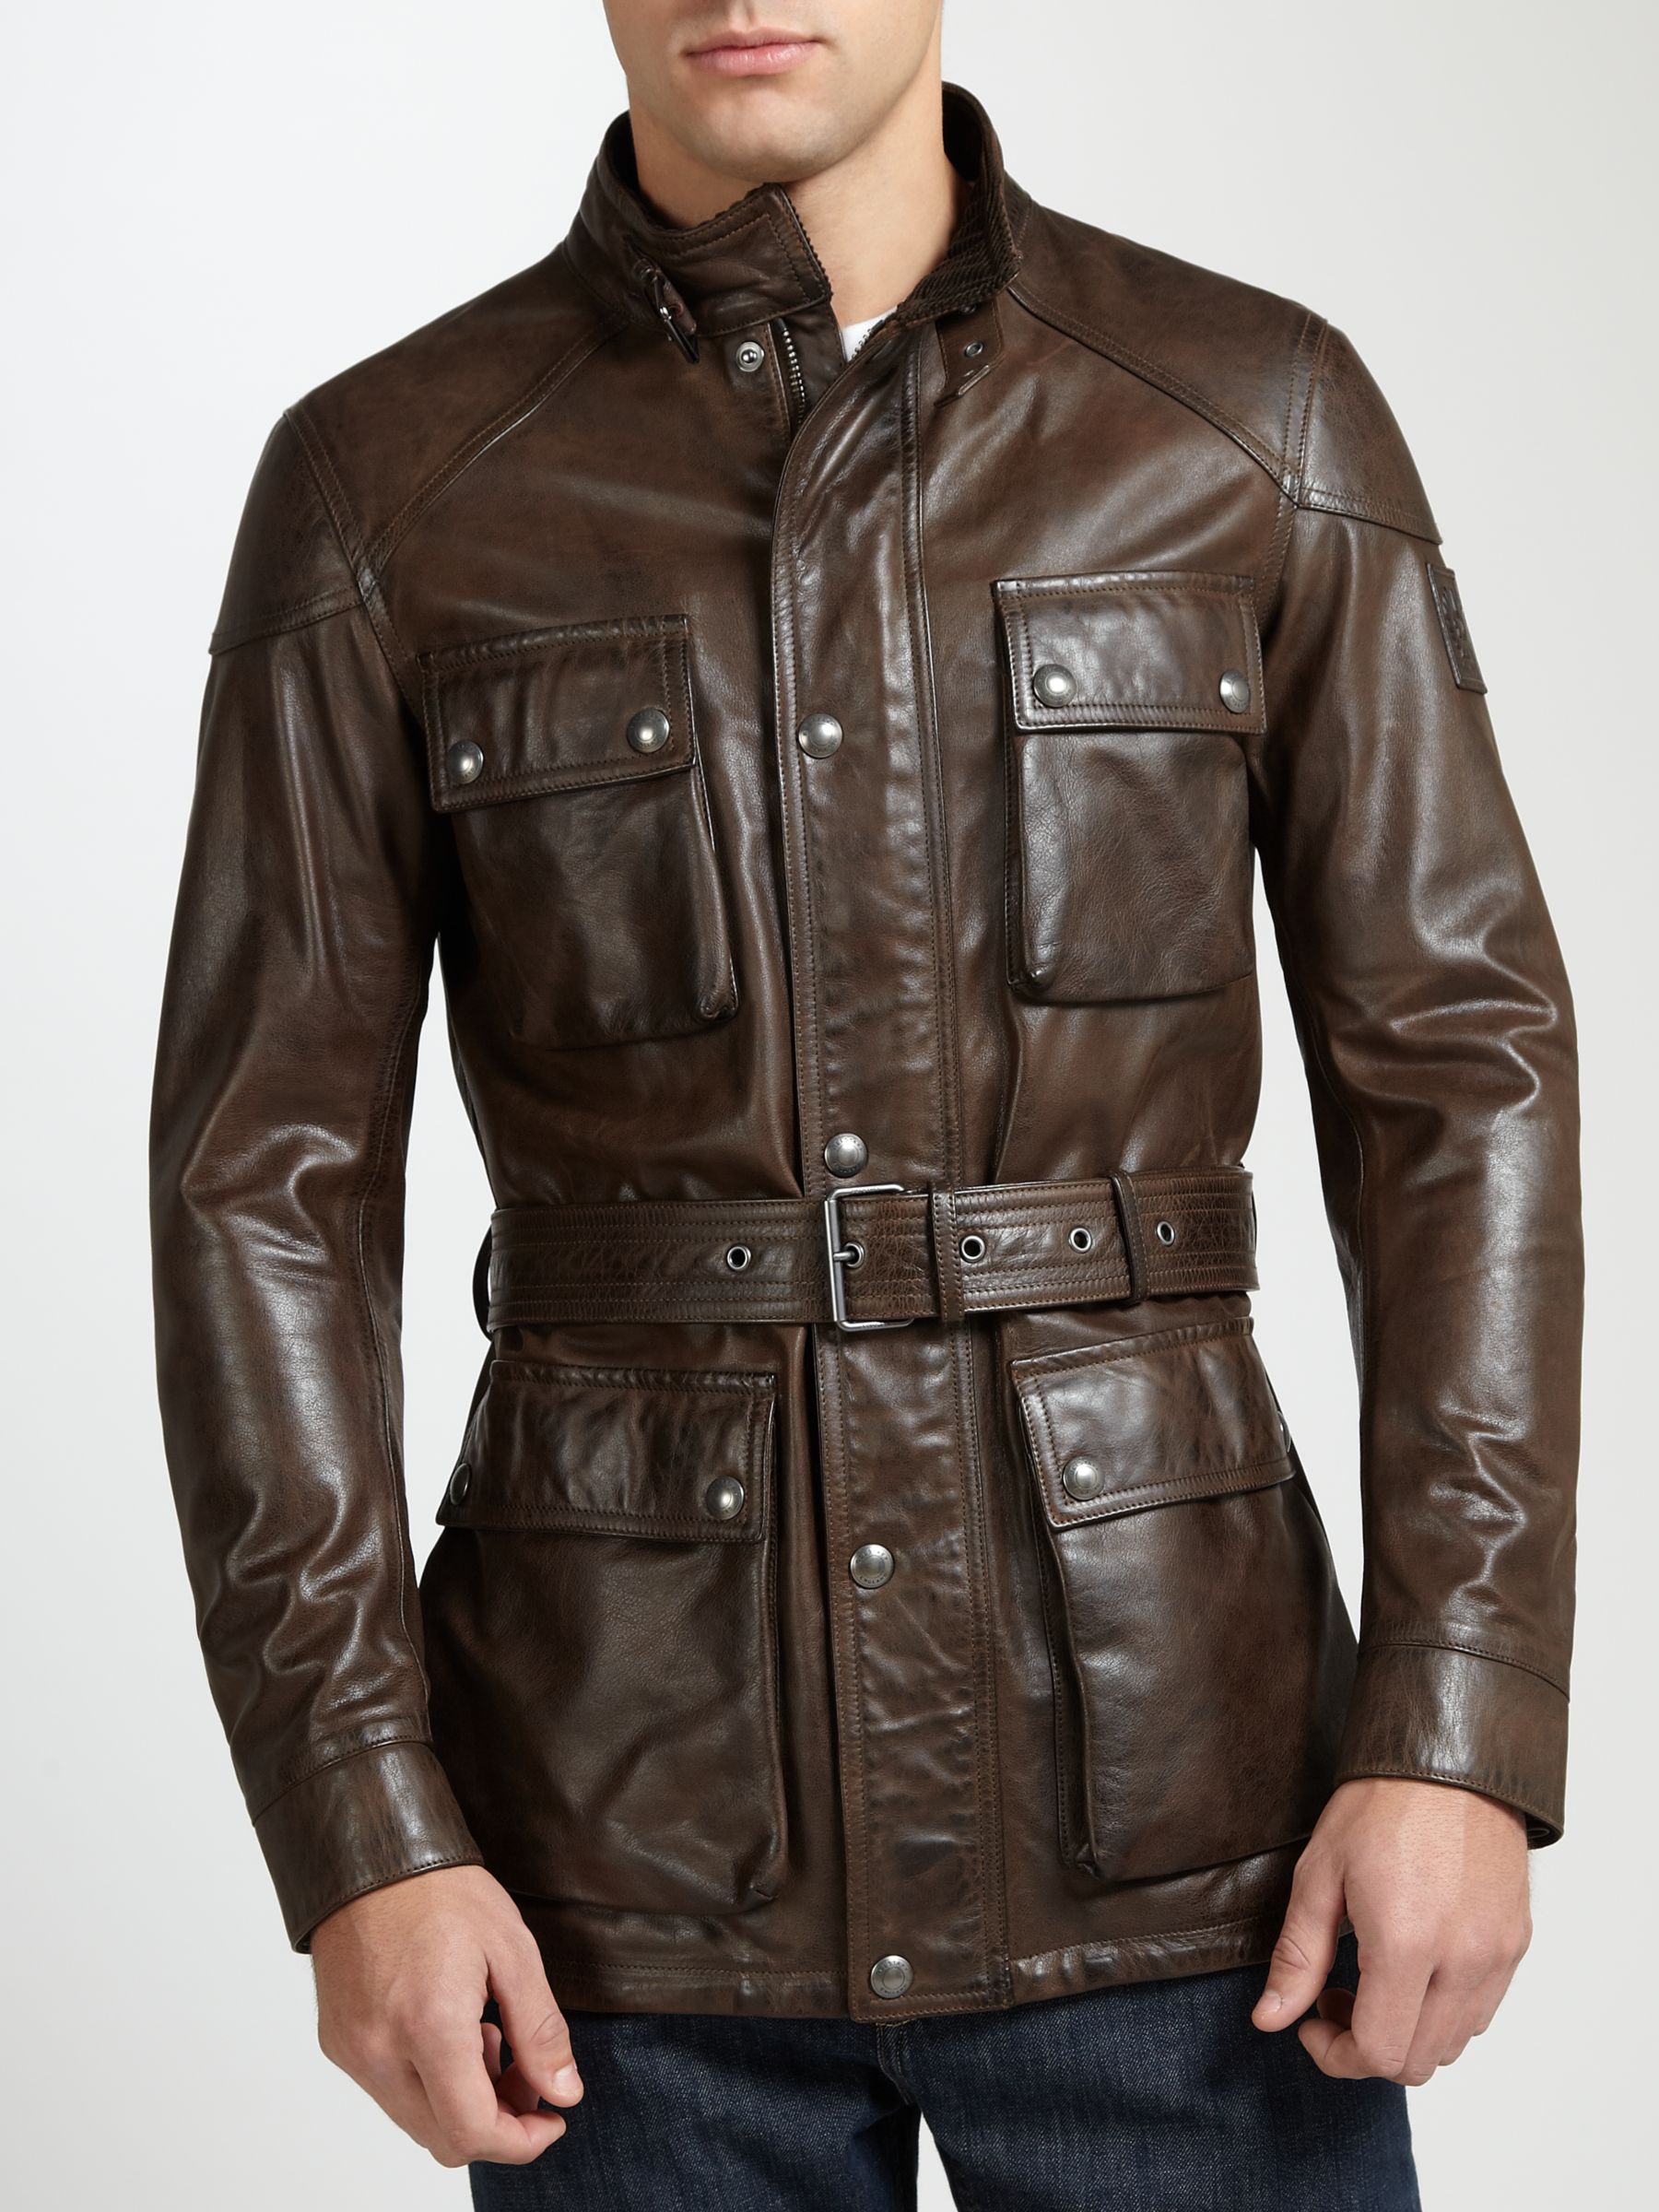 Belstaff Roadmaster Leather Jacket, Black/Brown at John Lewis & Partners